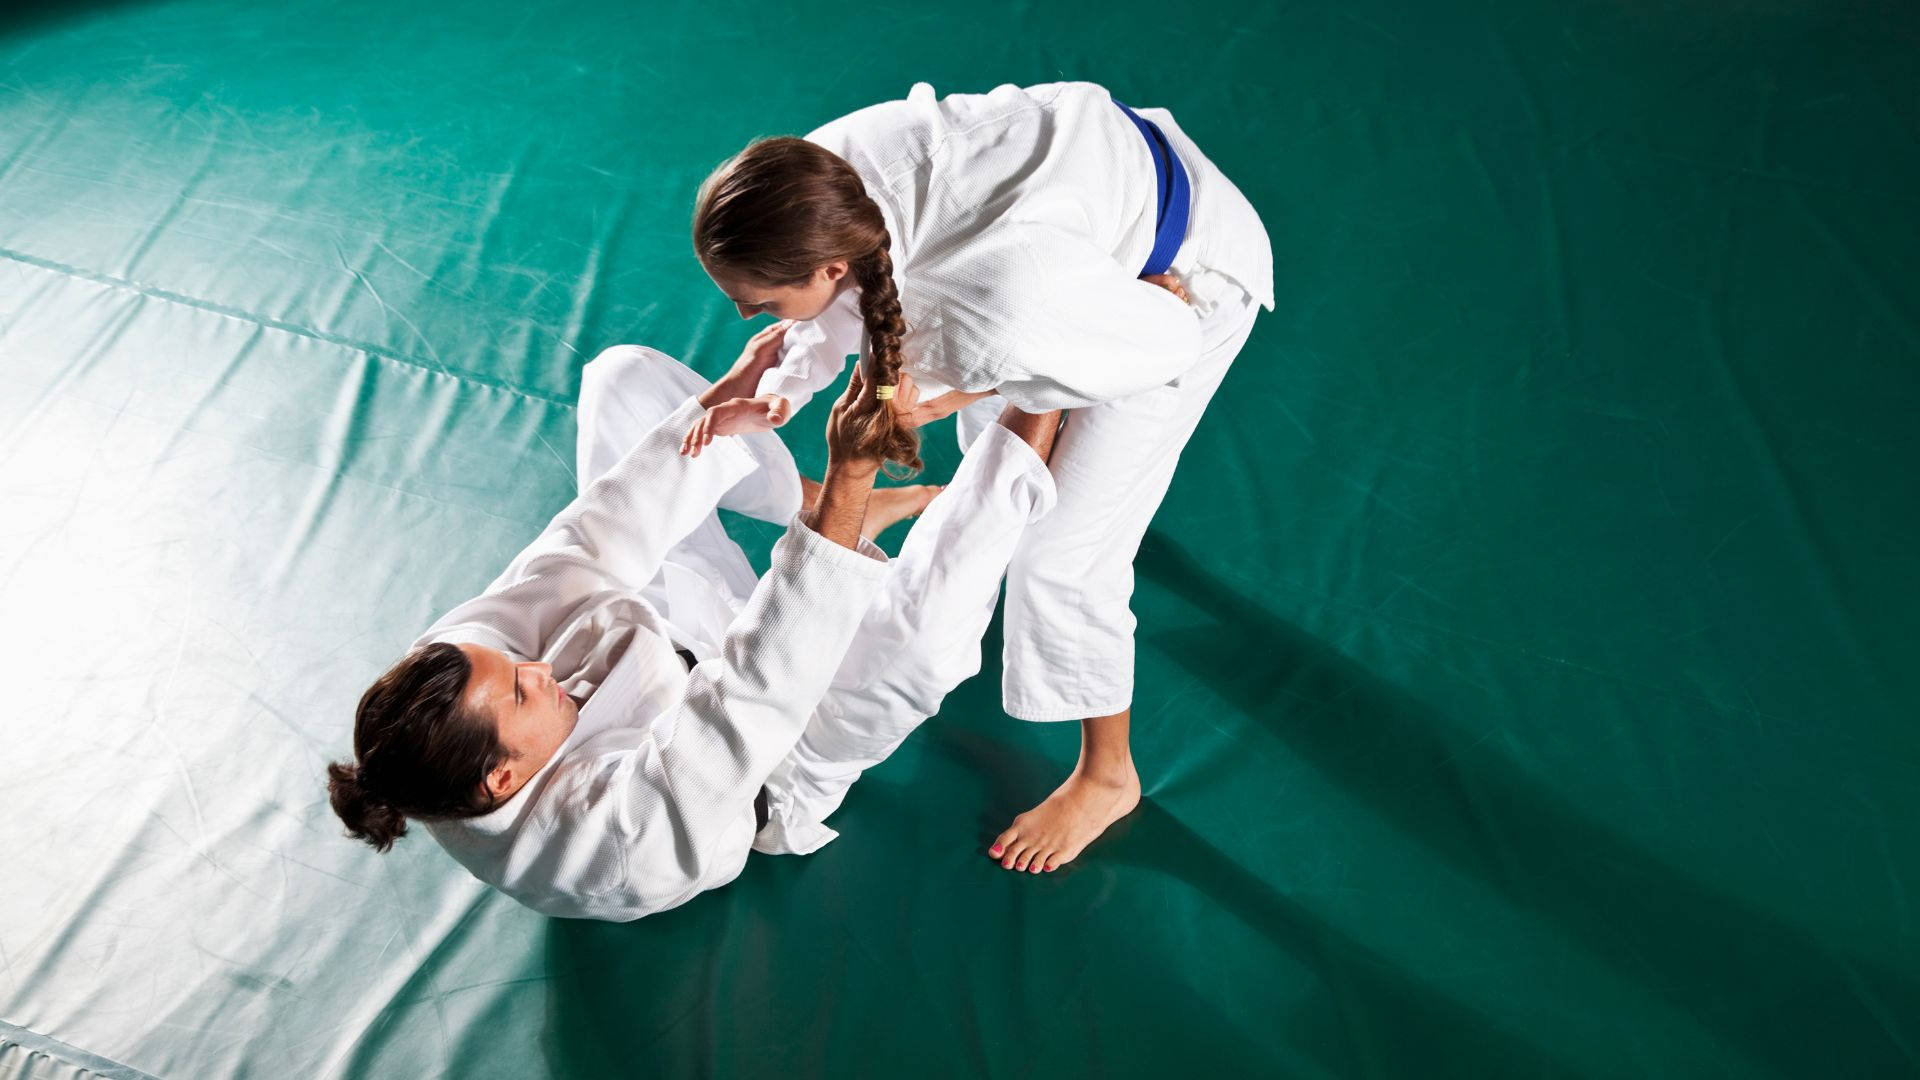 A Captivating Demonstration Of Brazilian Jiu-jitsu Prowess By Both Men And Women Contenders. Wallpaper